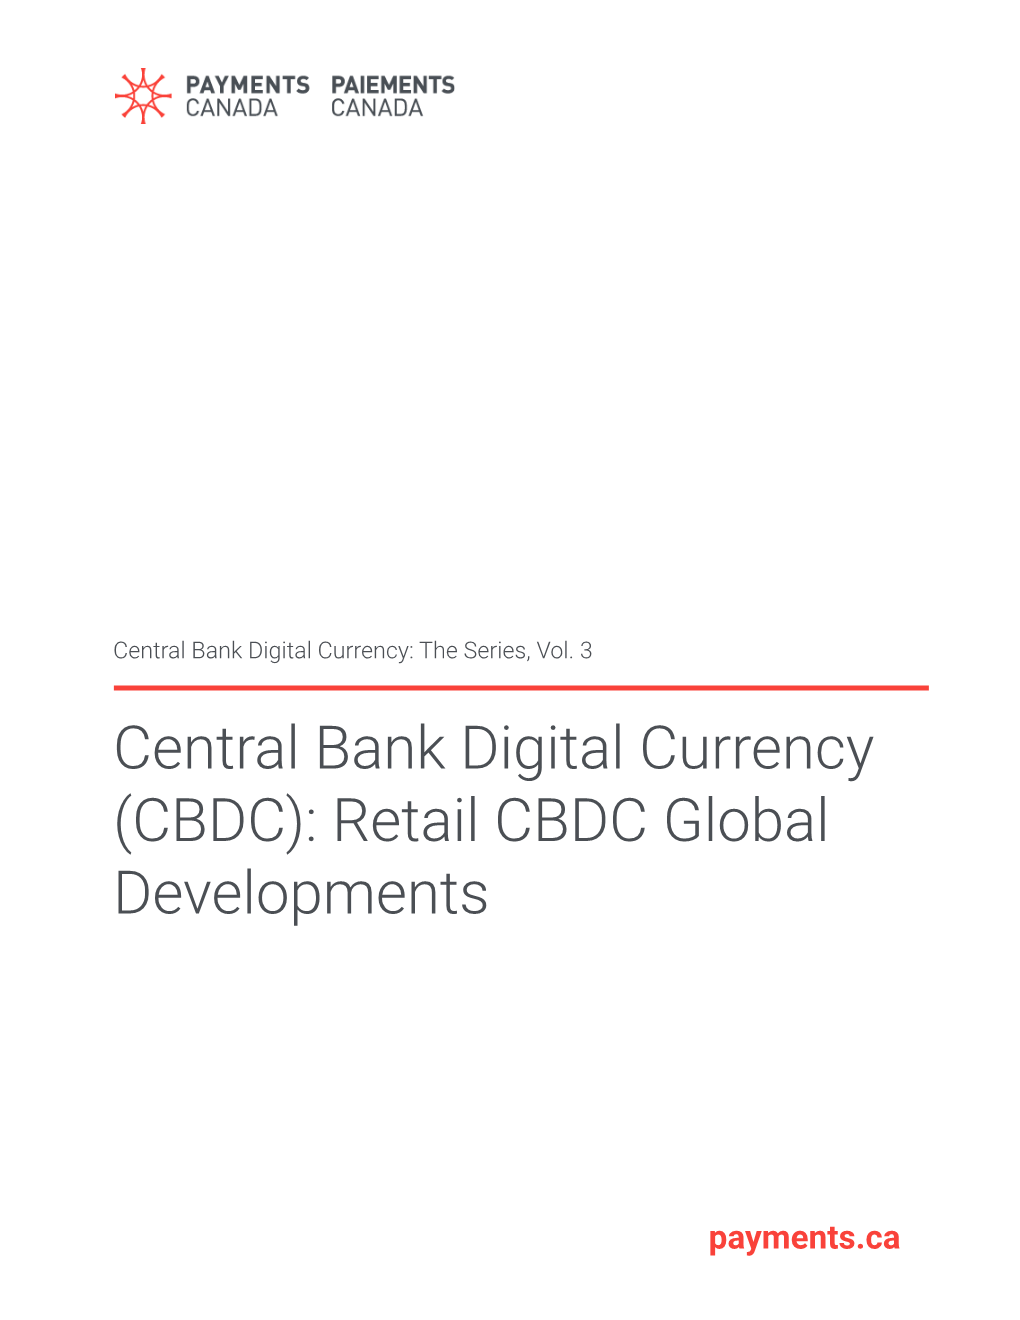 Retail CBDC Global Developments